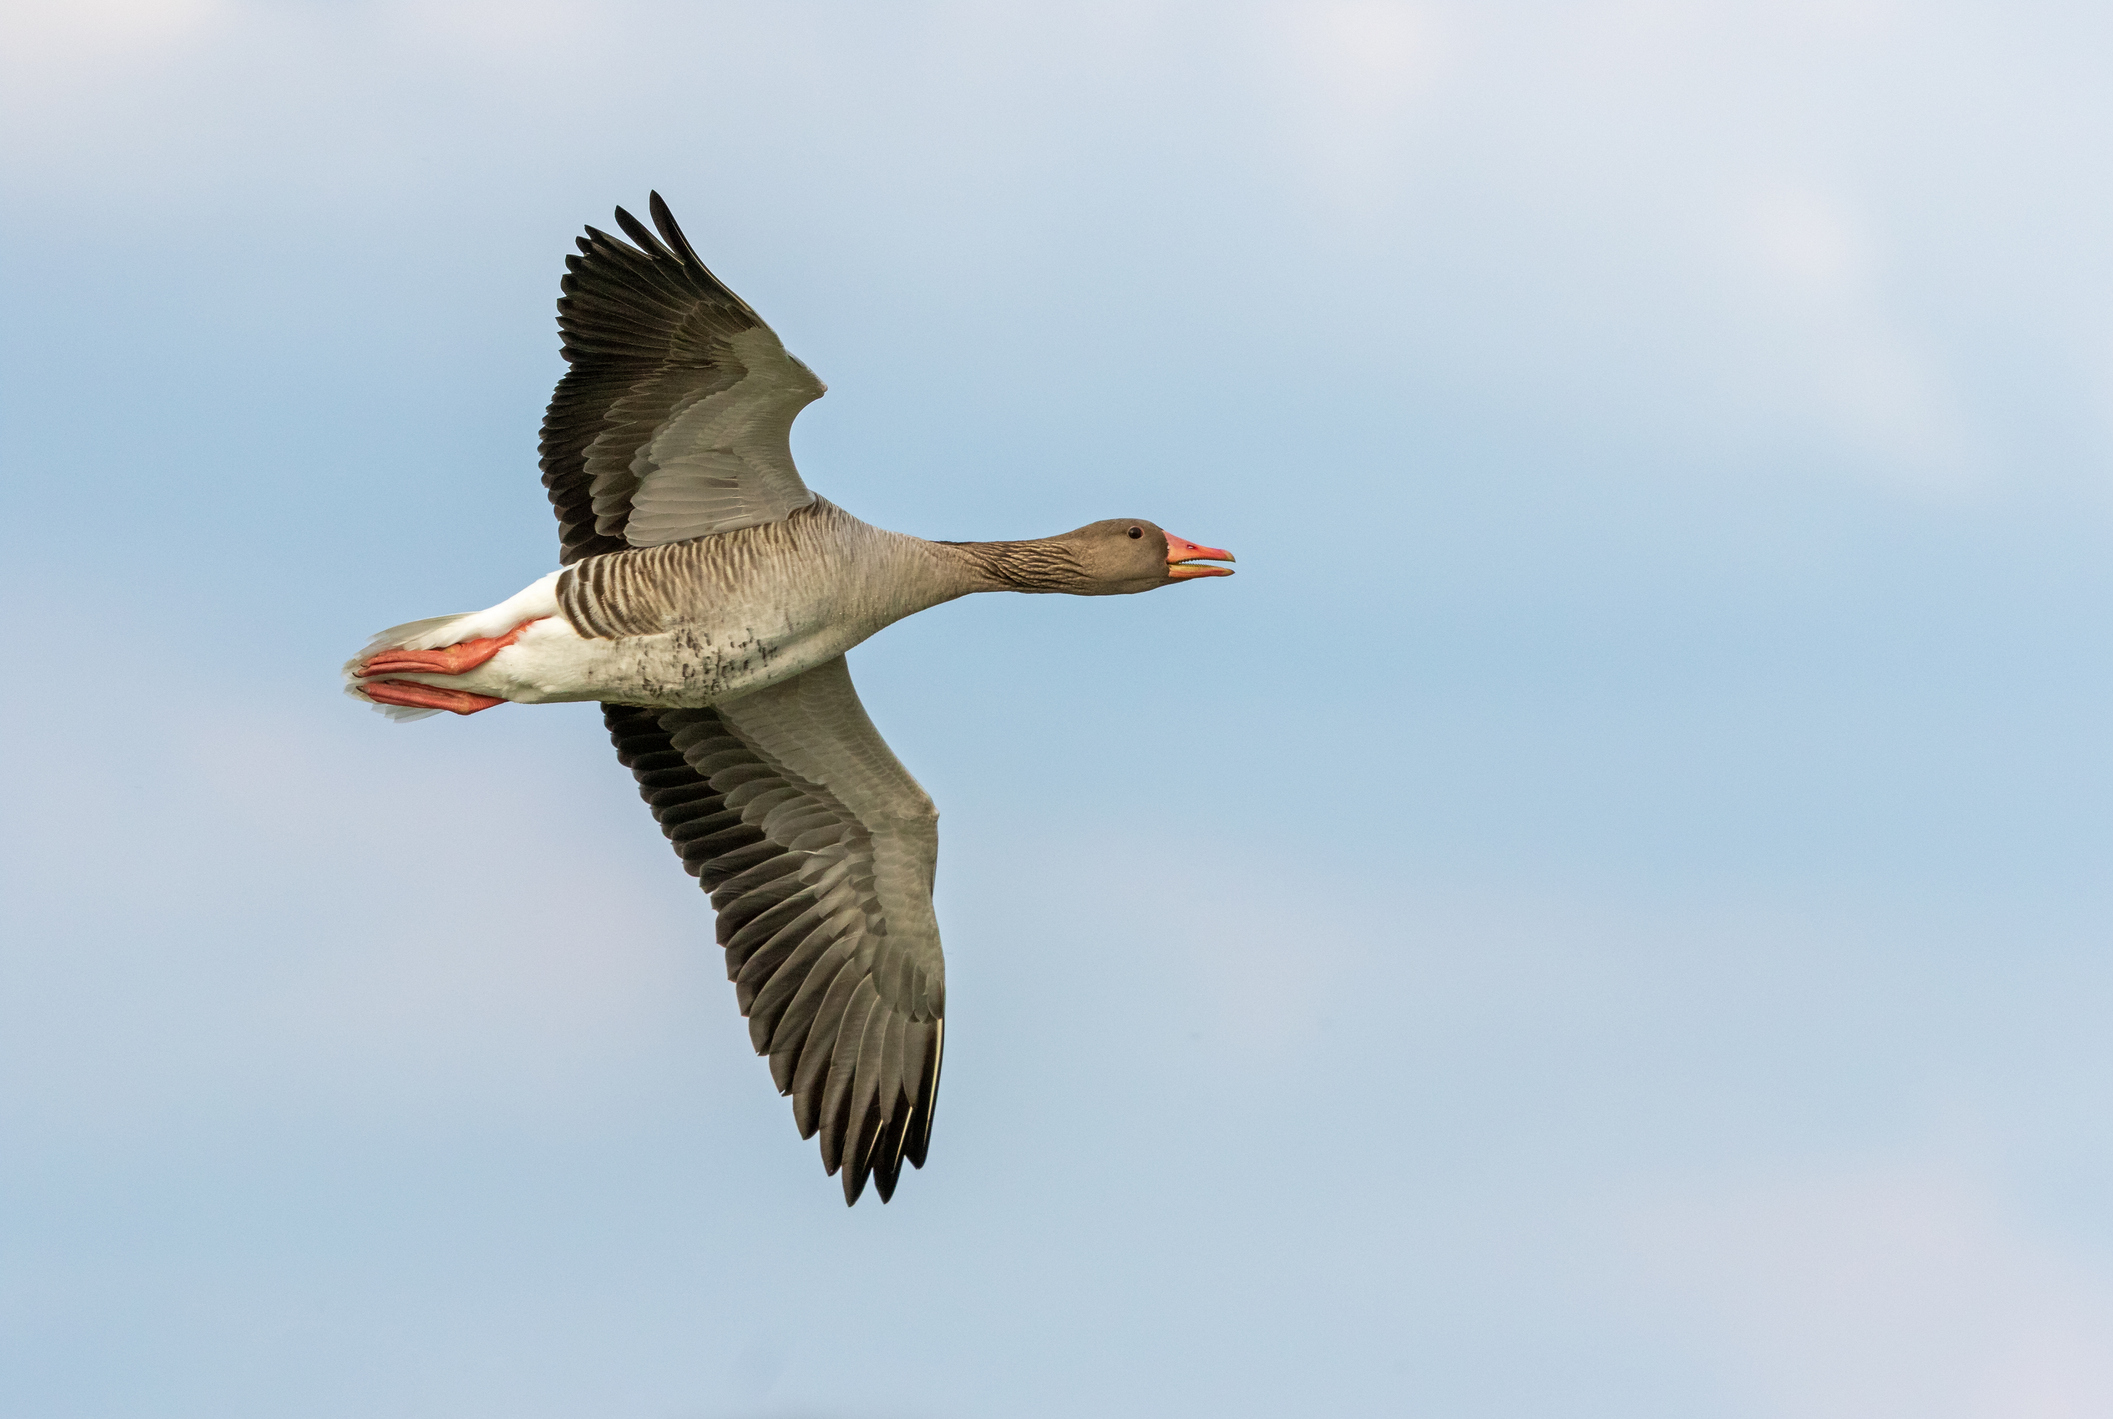 Flying goose